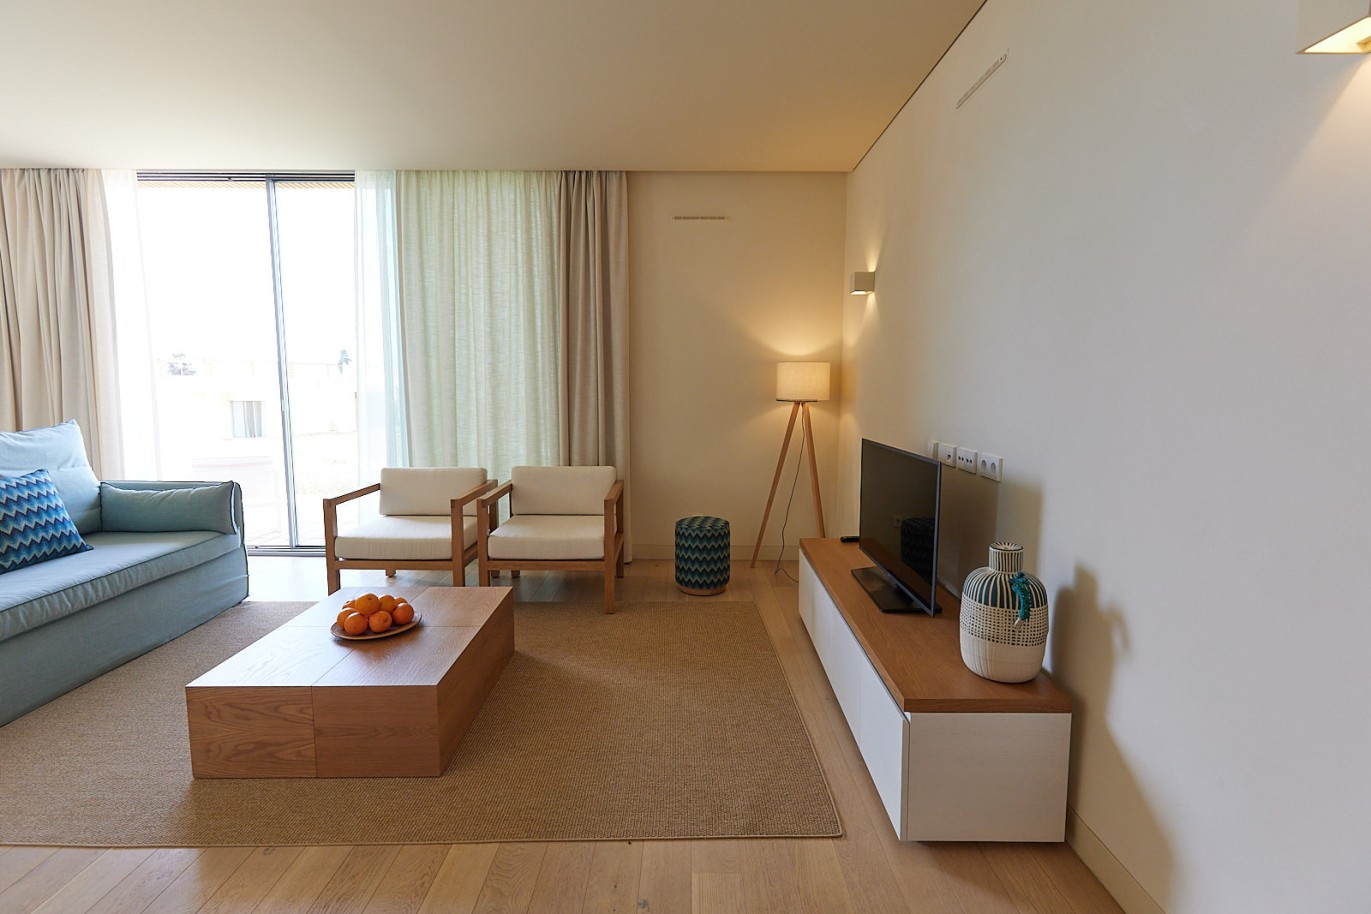 2 bedroom apartment in resort, for sale in Porches, Algarve_228726